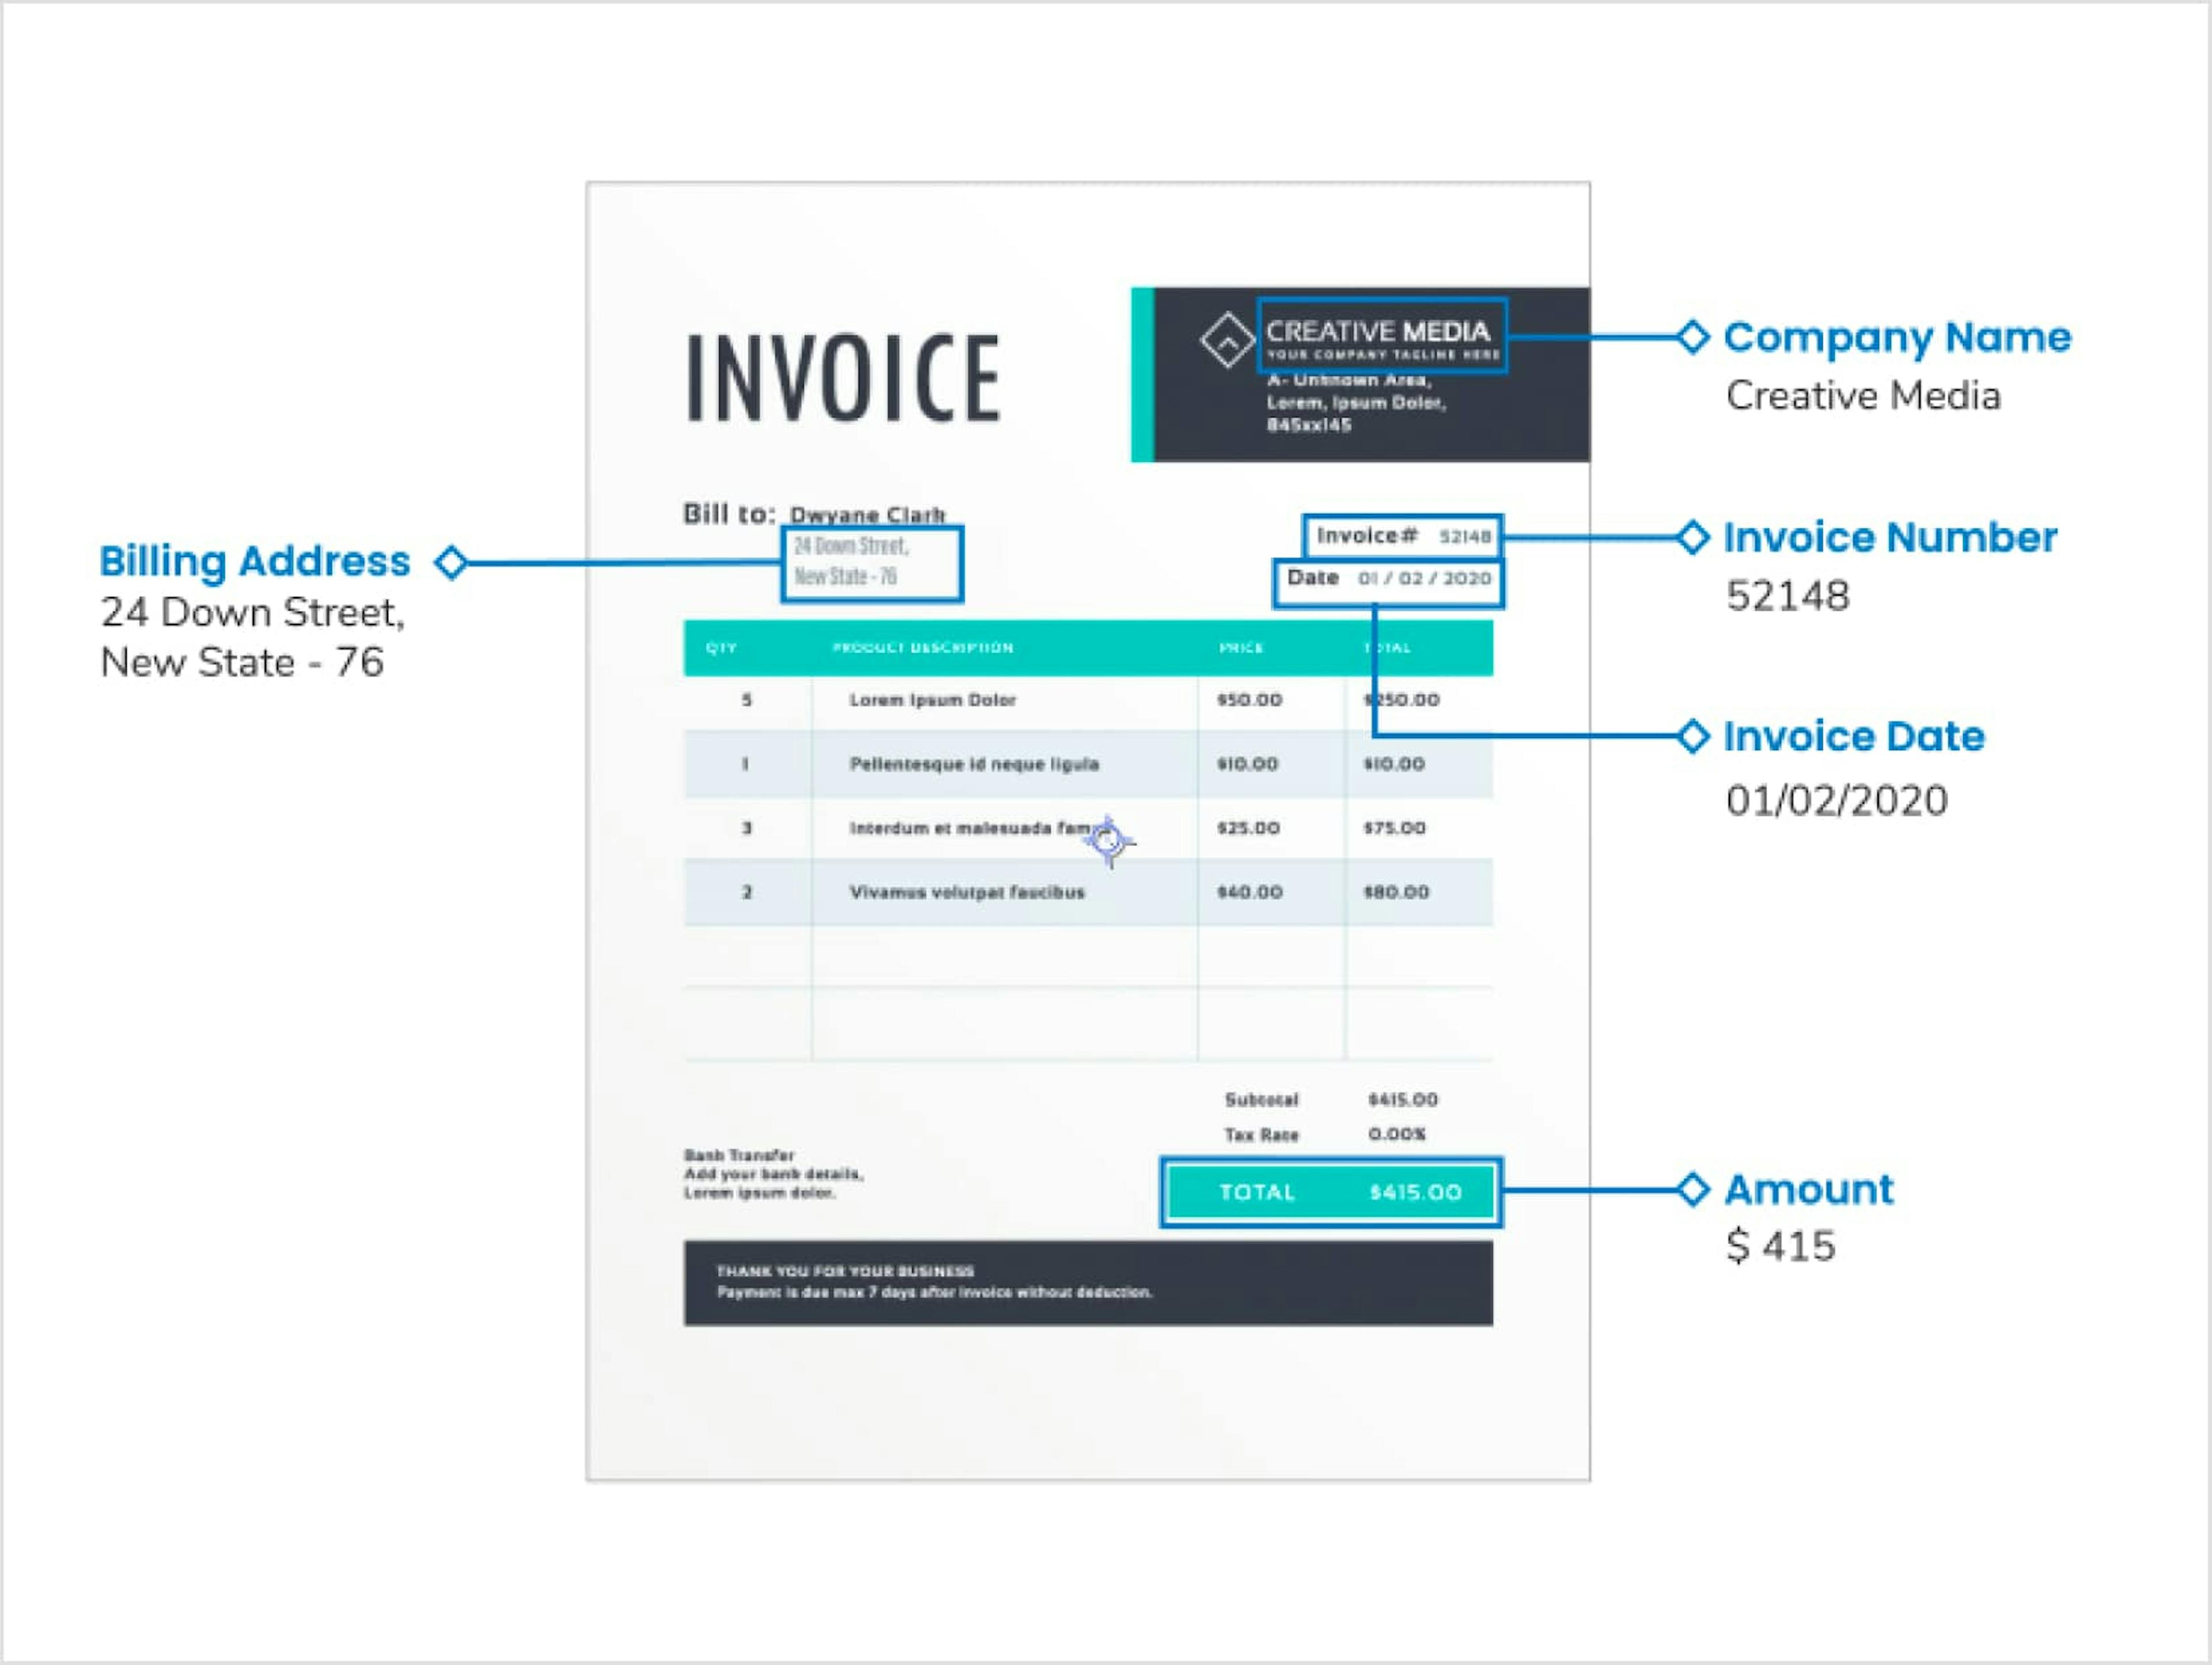 Invoice process automation